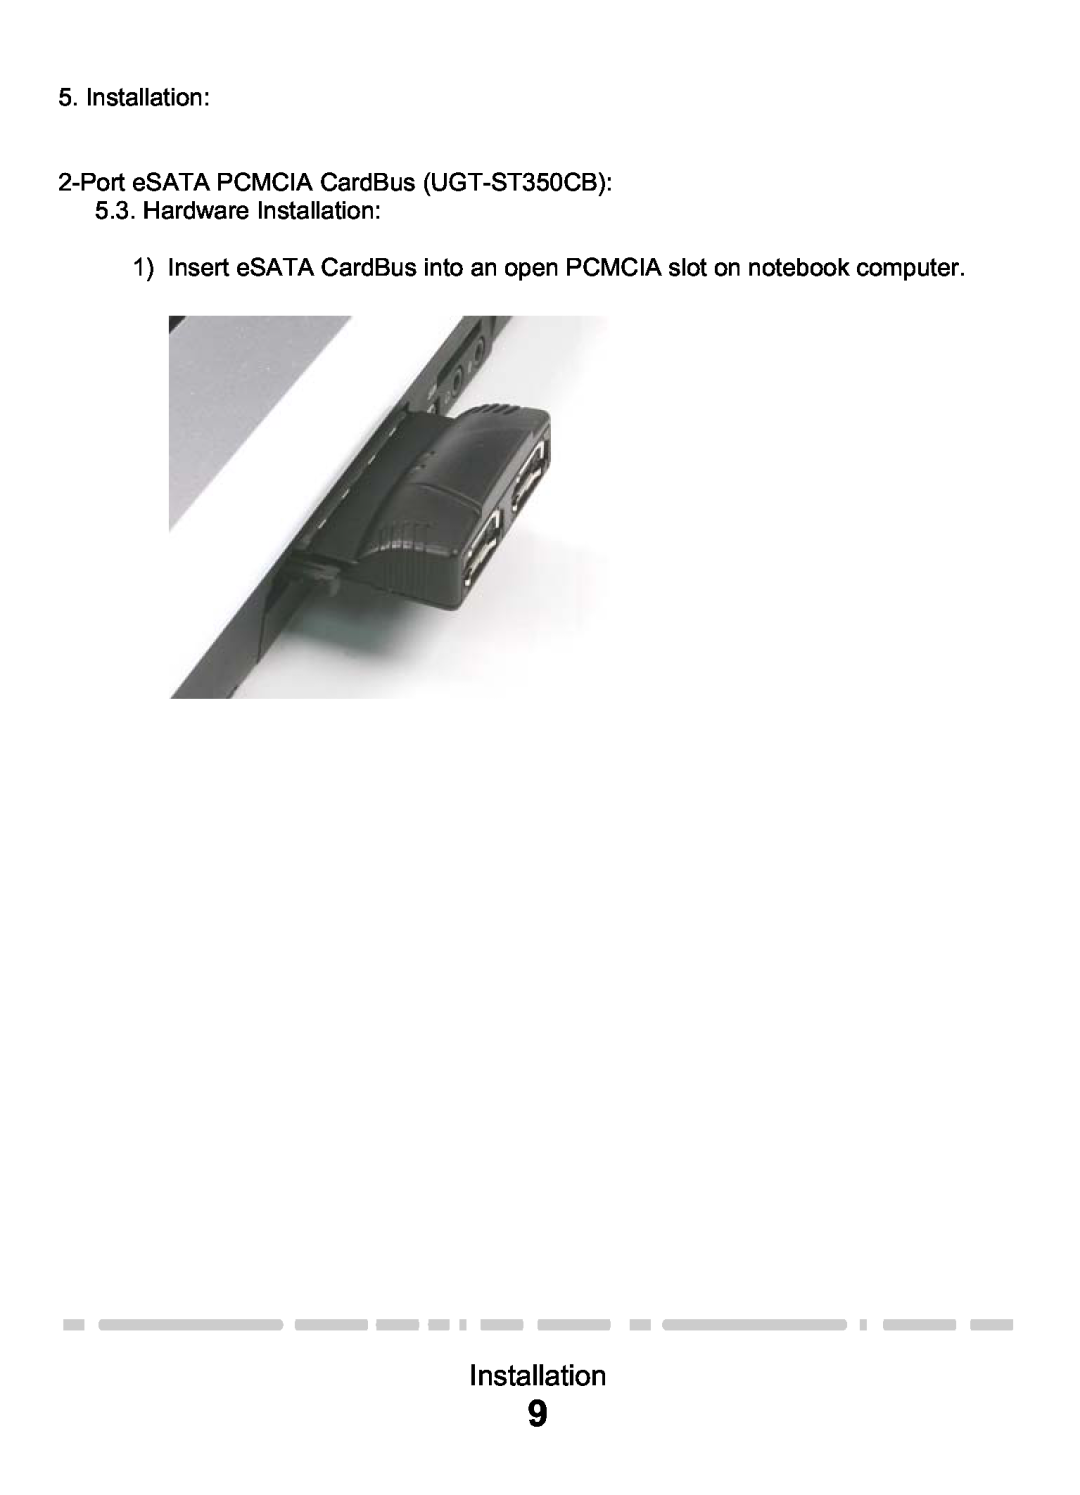 Vantec PCI & PCI-E Card & CardBus manual Installation 2-Port eSATA PCMCIA CardBus UGT-ST350CB, Hardware Installation 